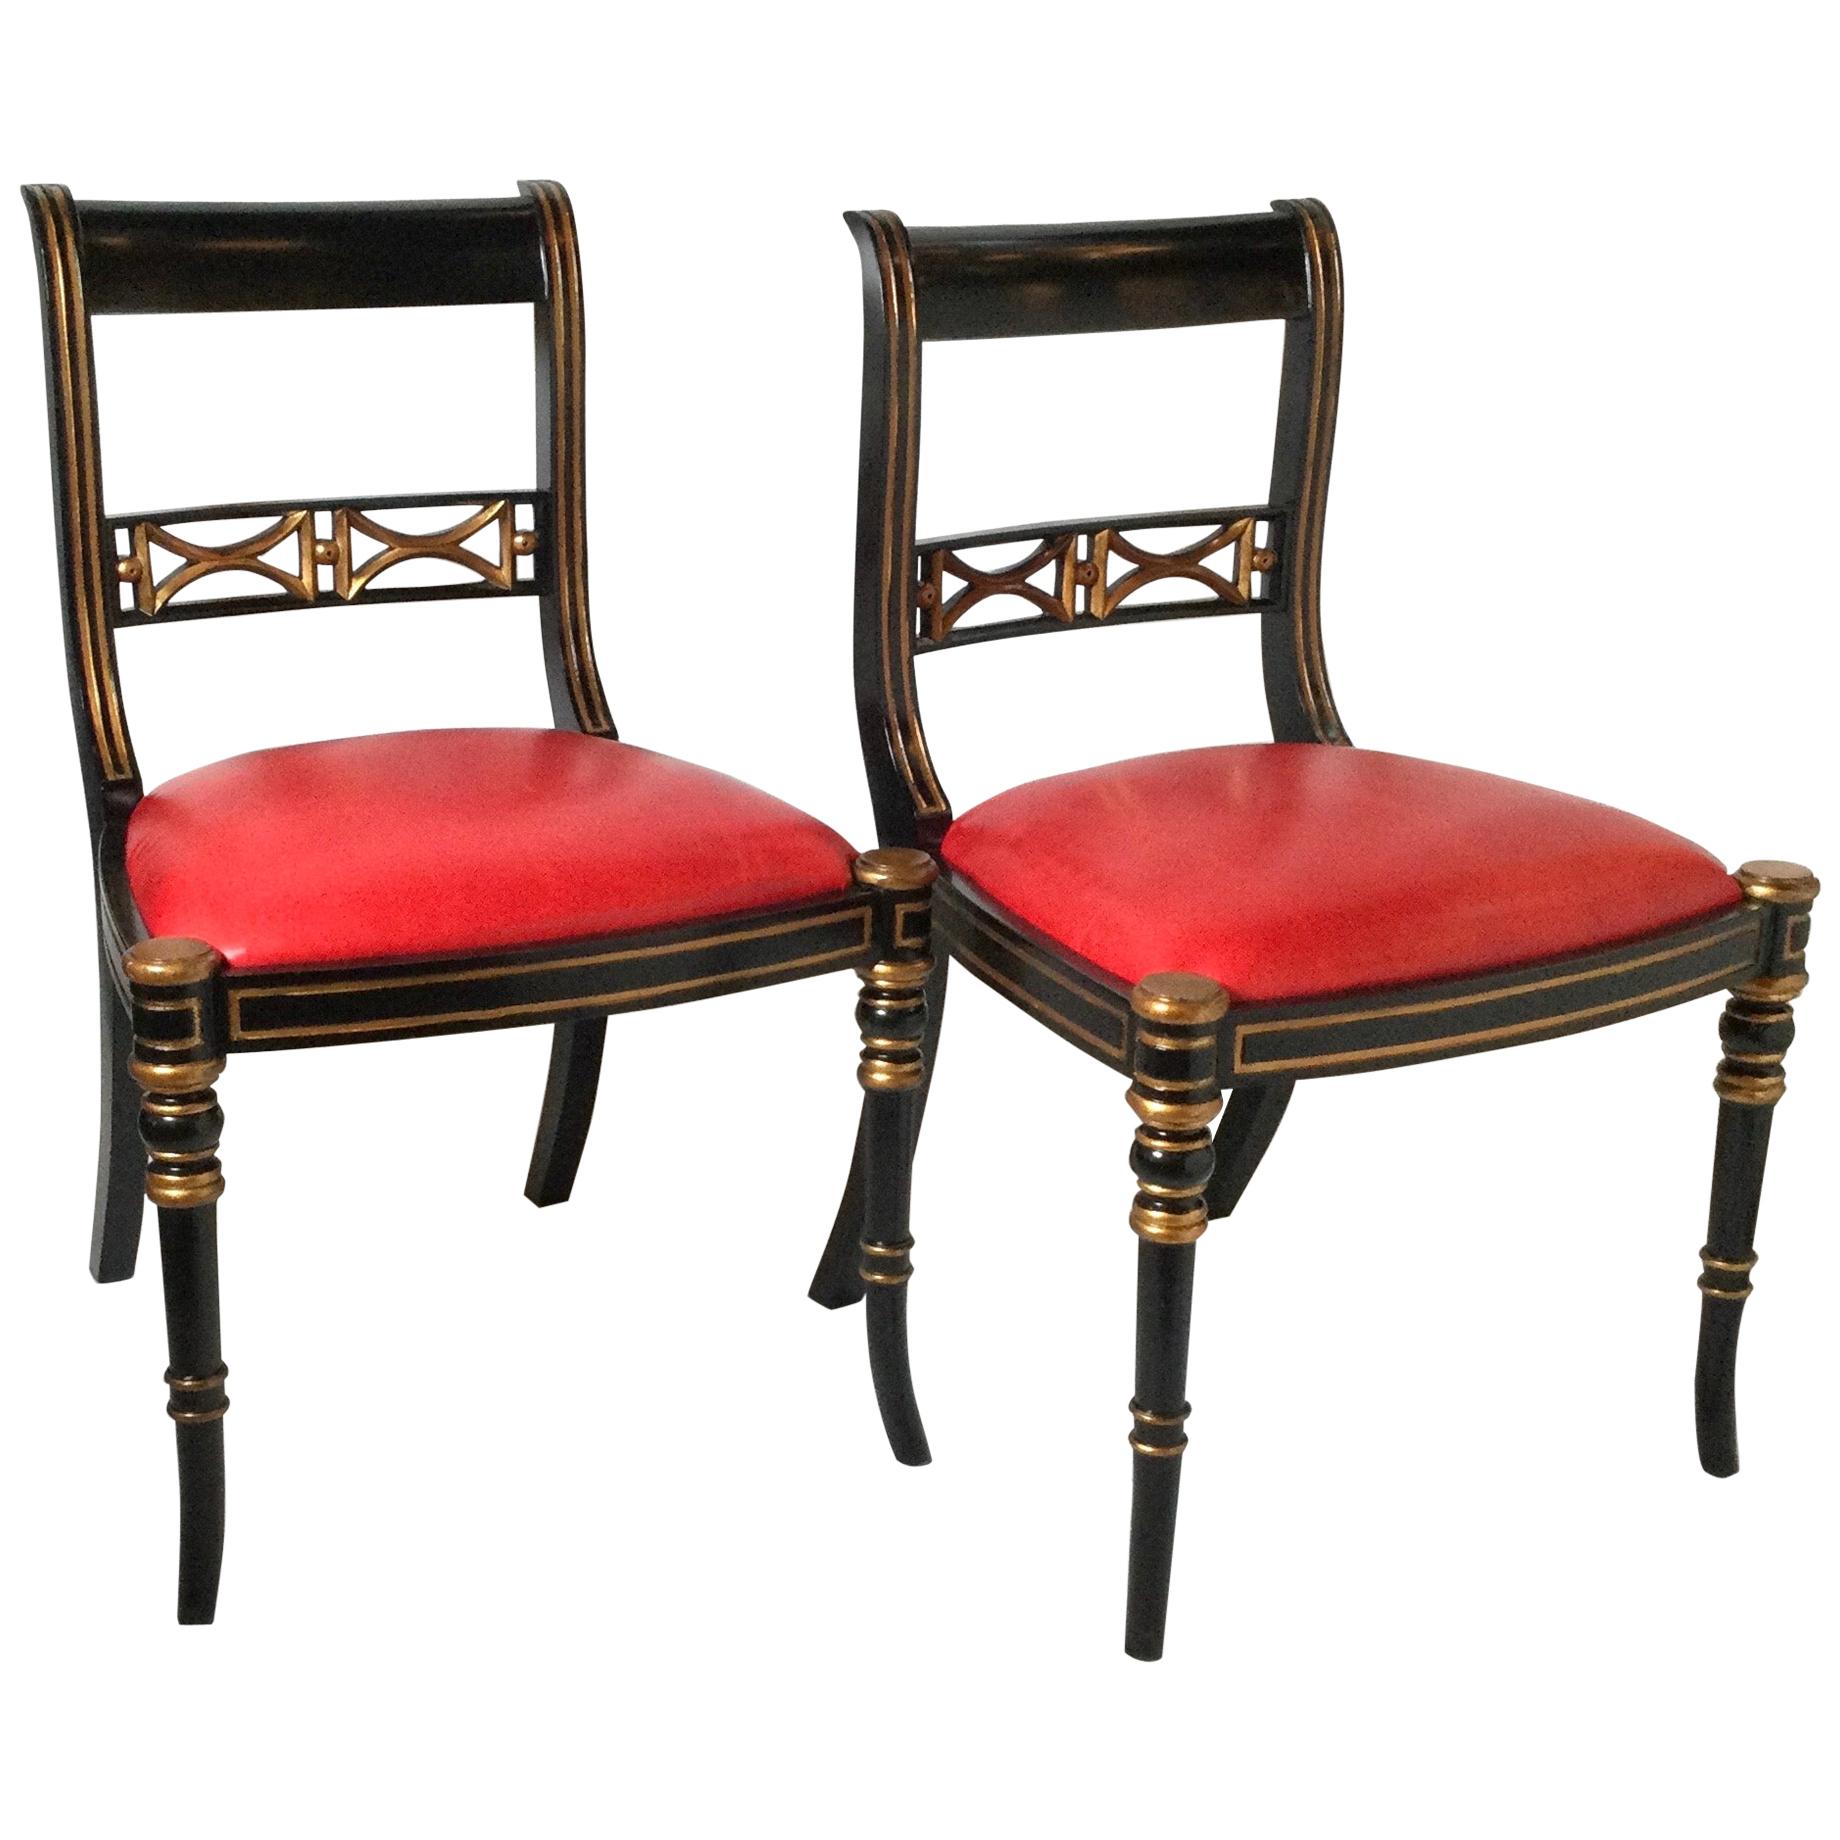 Pair of Ebonized Regency Style Side Chairs